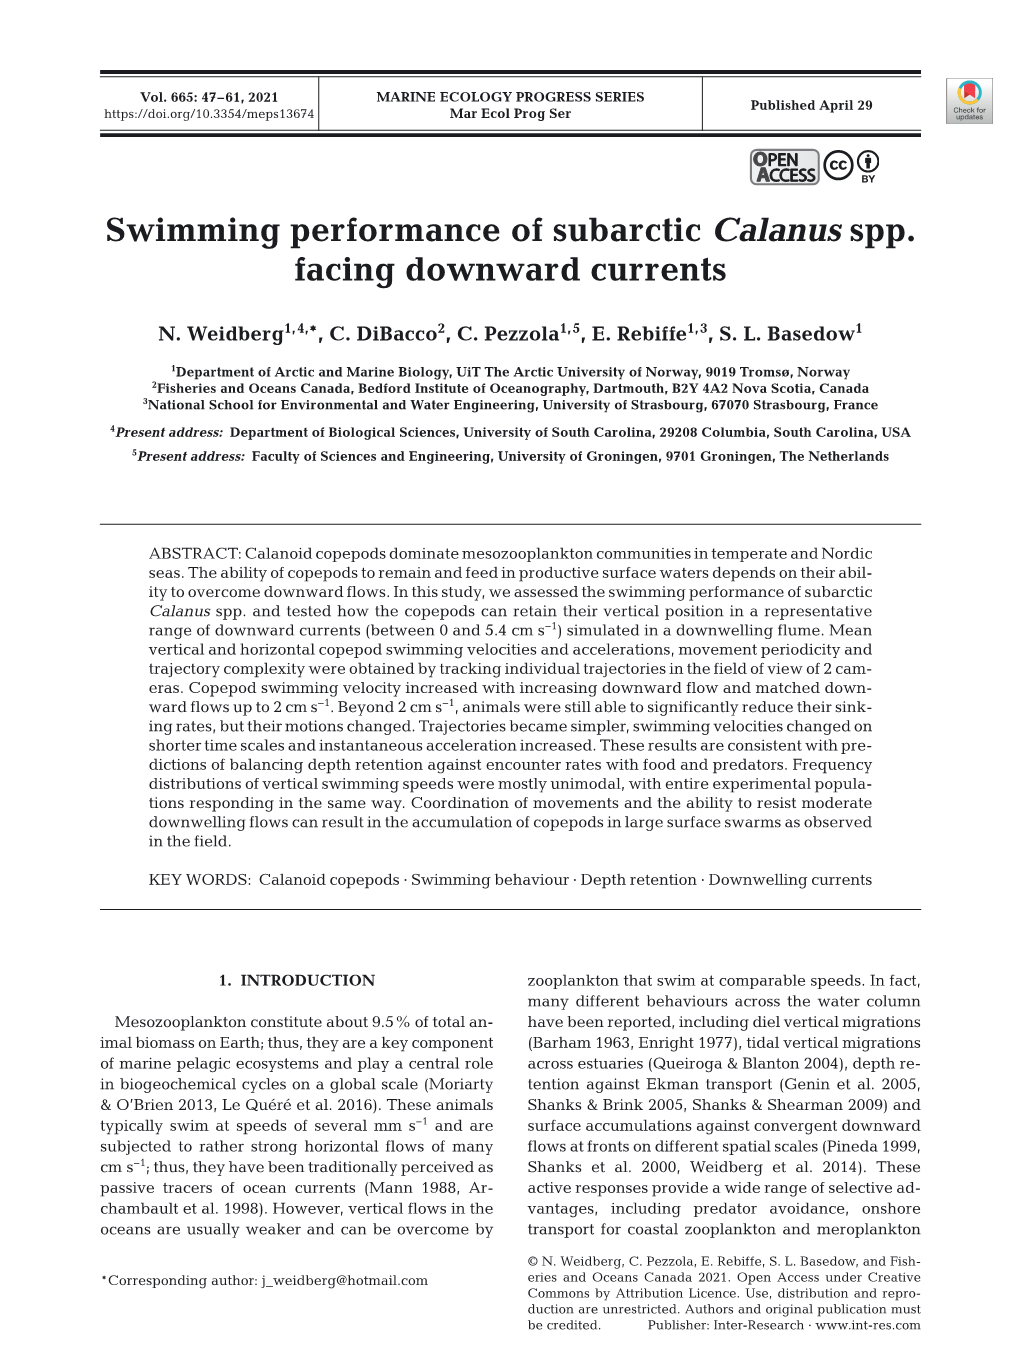 Swimming Performance of Subarctic Calanus Spp. Facing Downward Currents